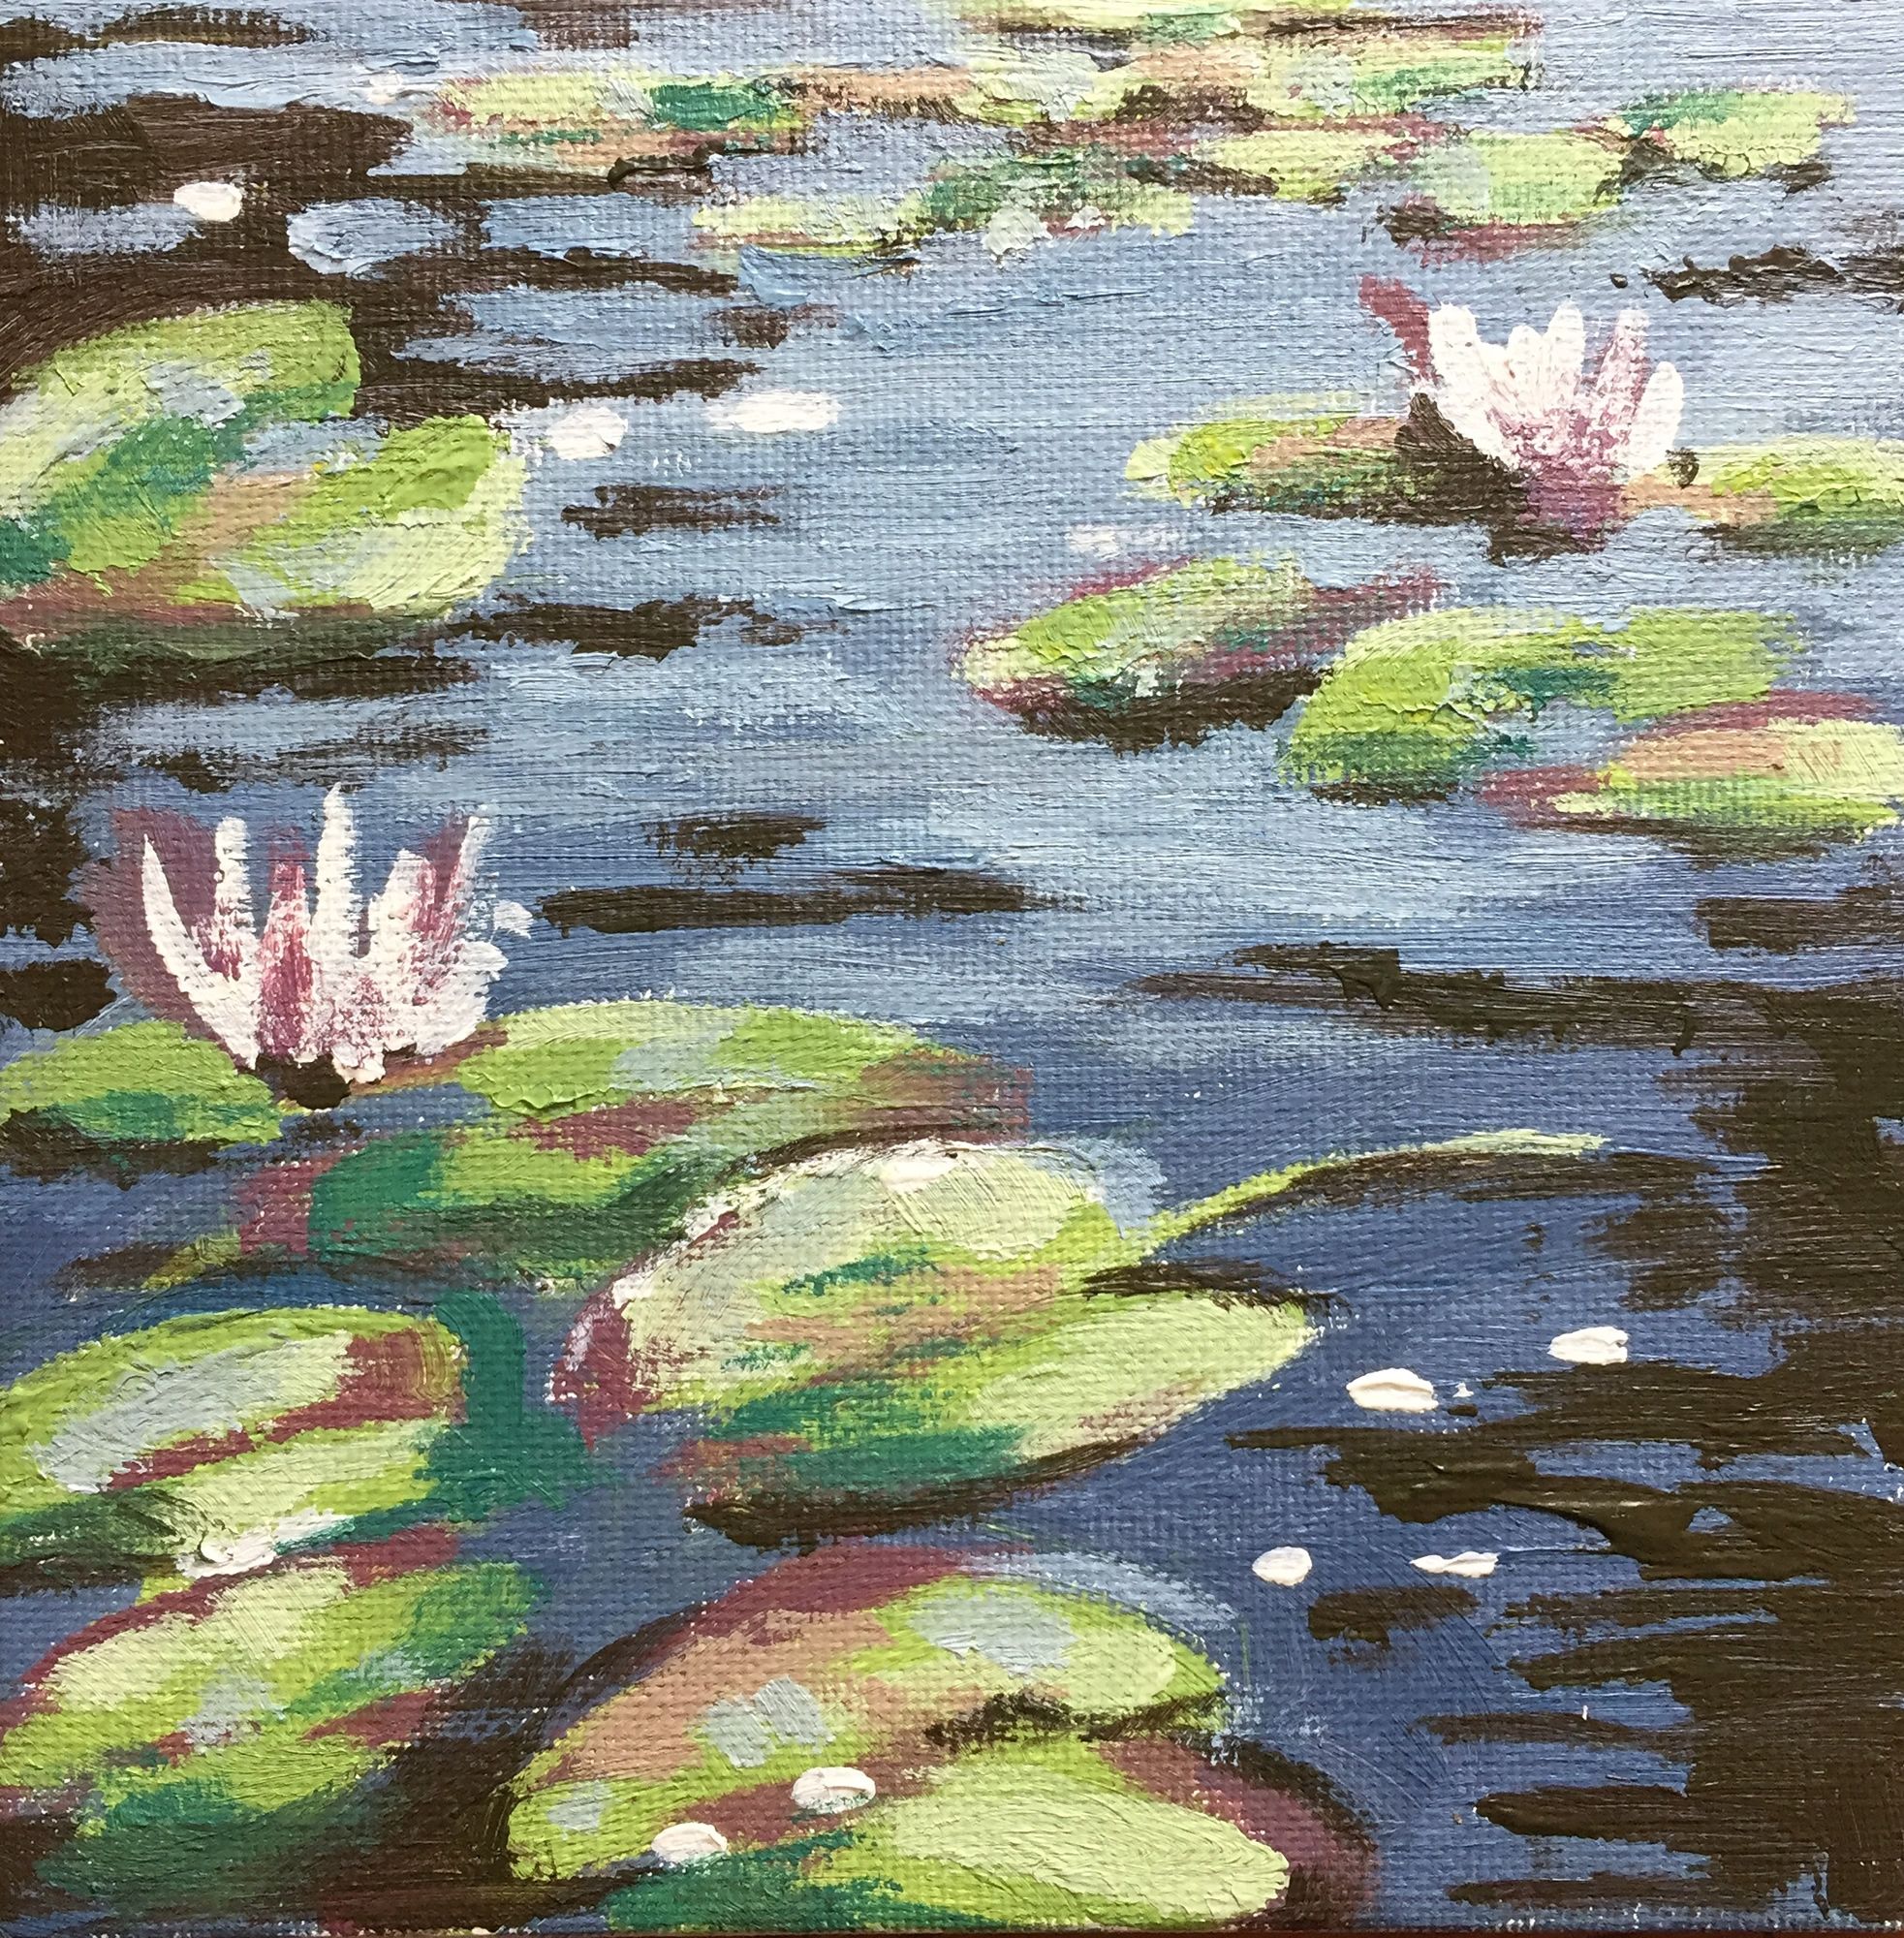 Lily Pond Study 2 by Alexandra Buckle